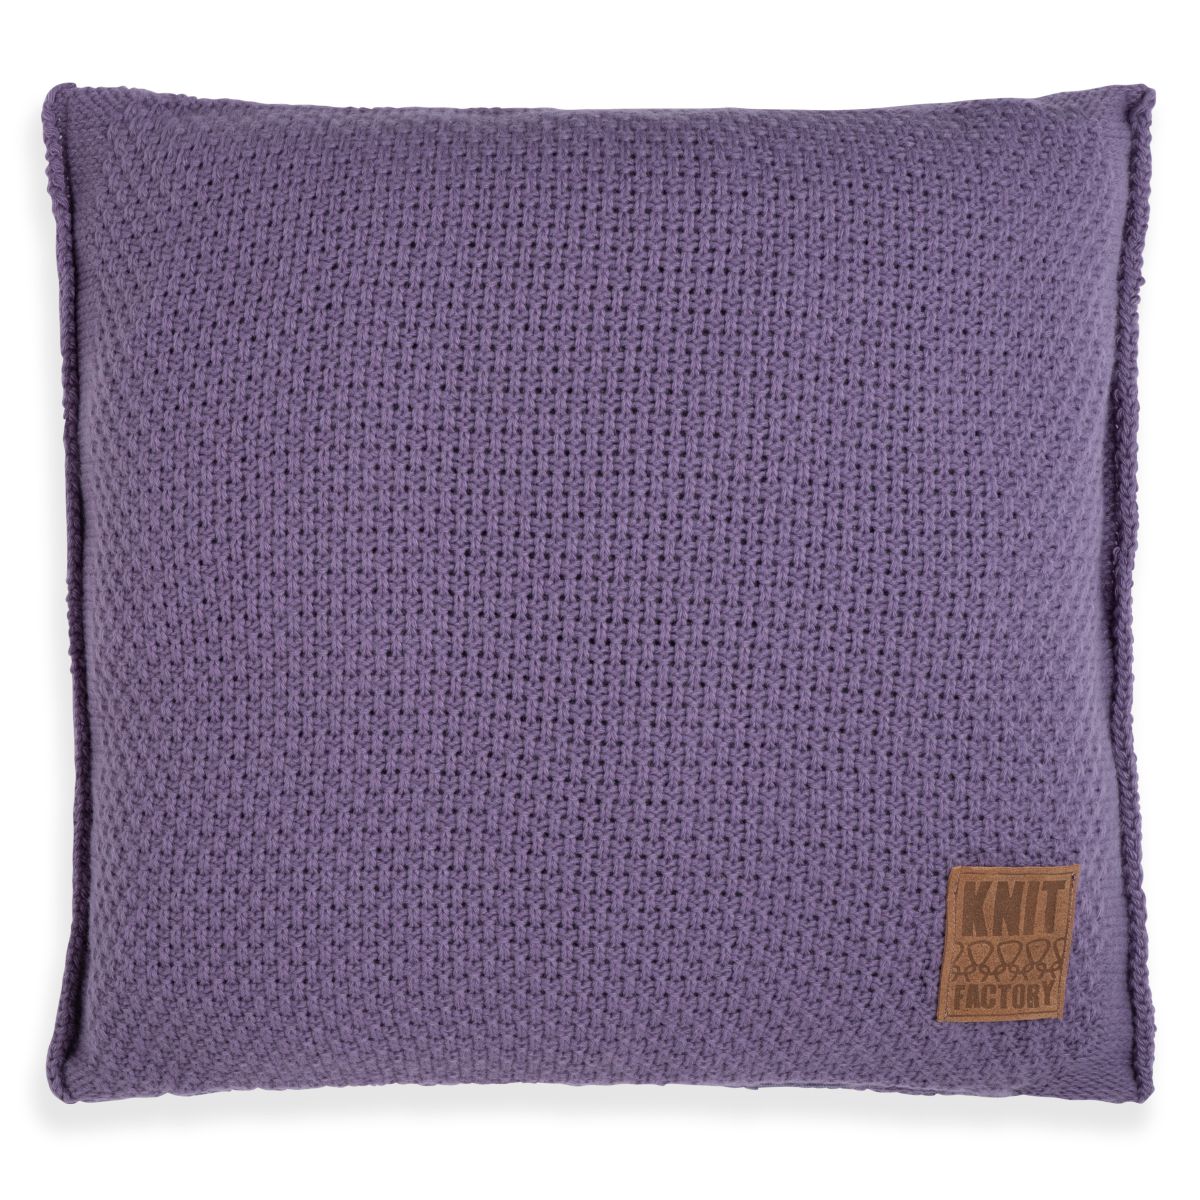 jesse cushion violet 50x50